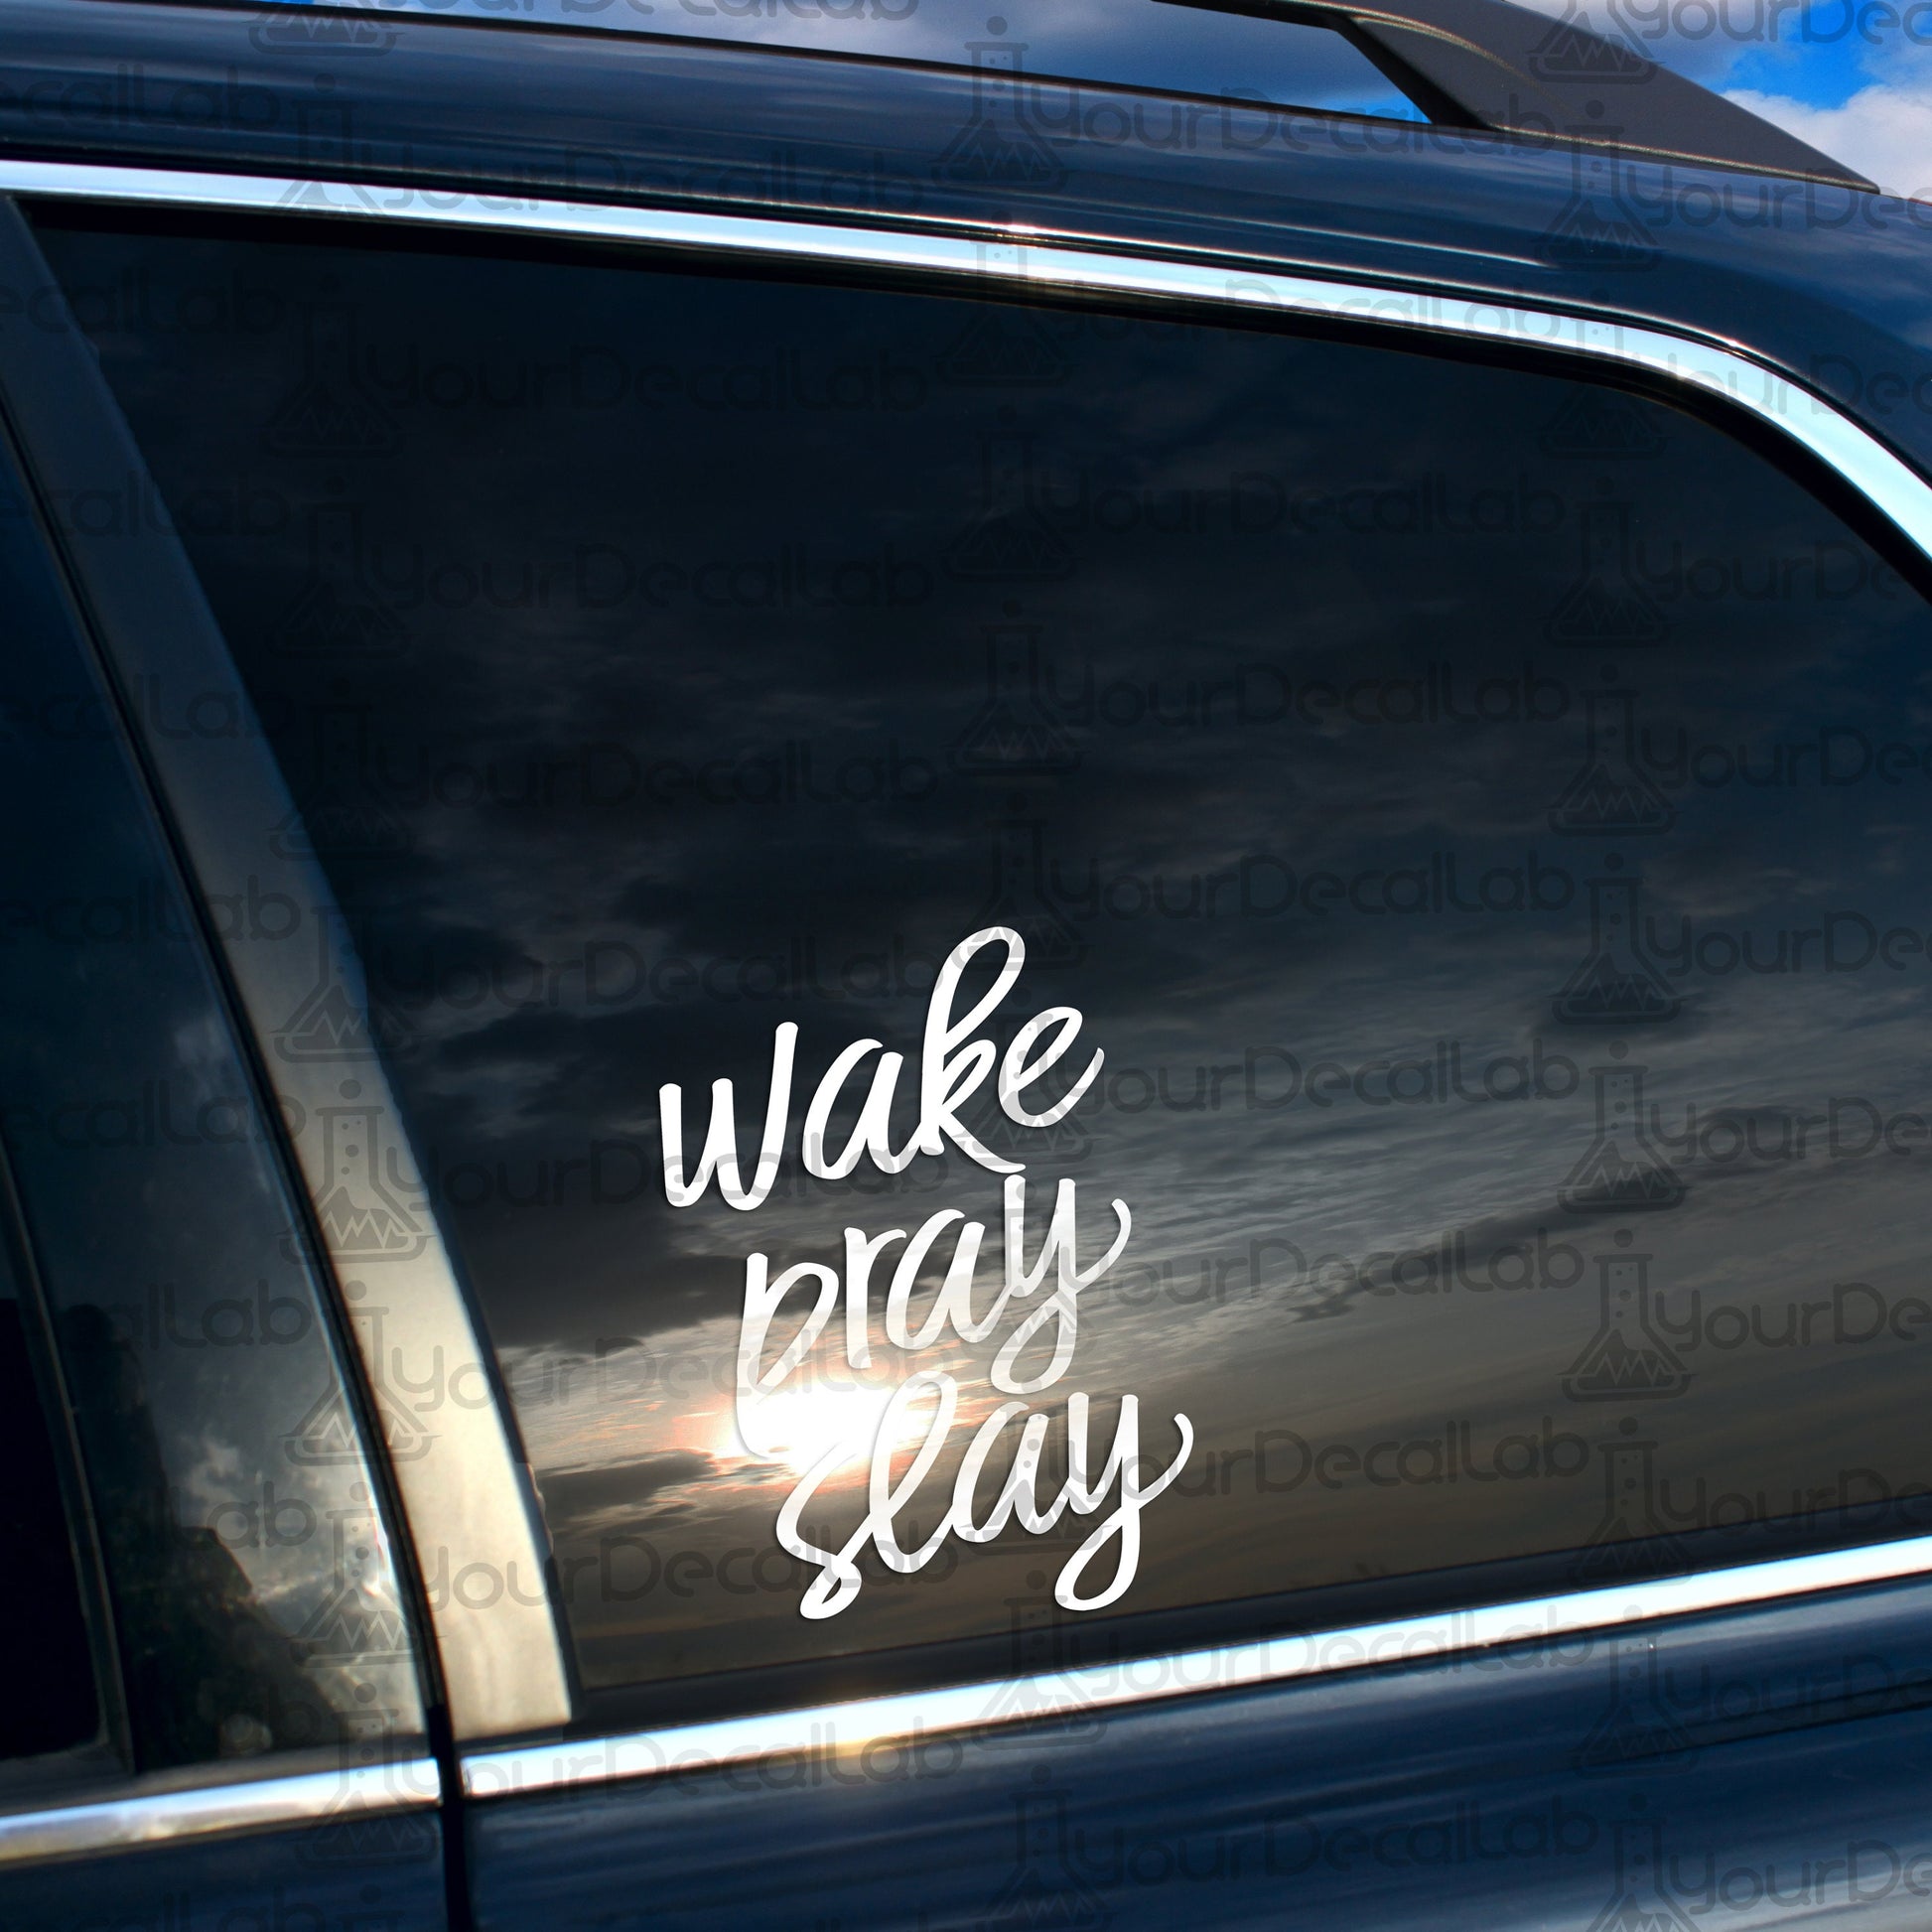 a car with a wake pray slay sticker on it